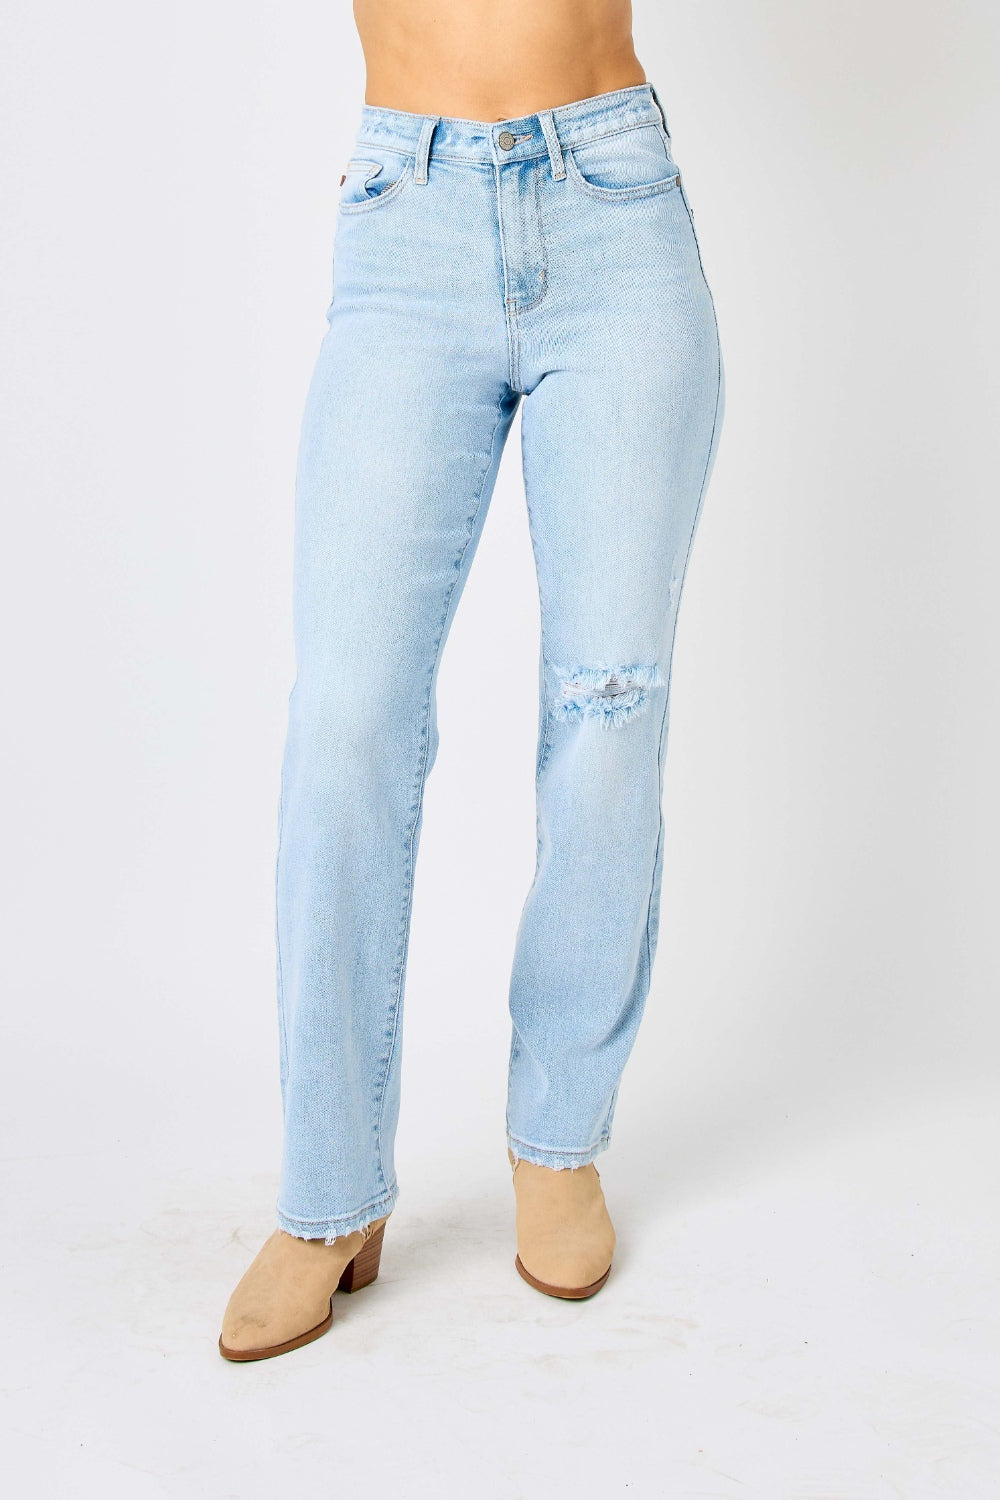 Tayla High Waist Distressed Straight Jeans